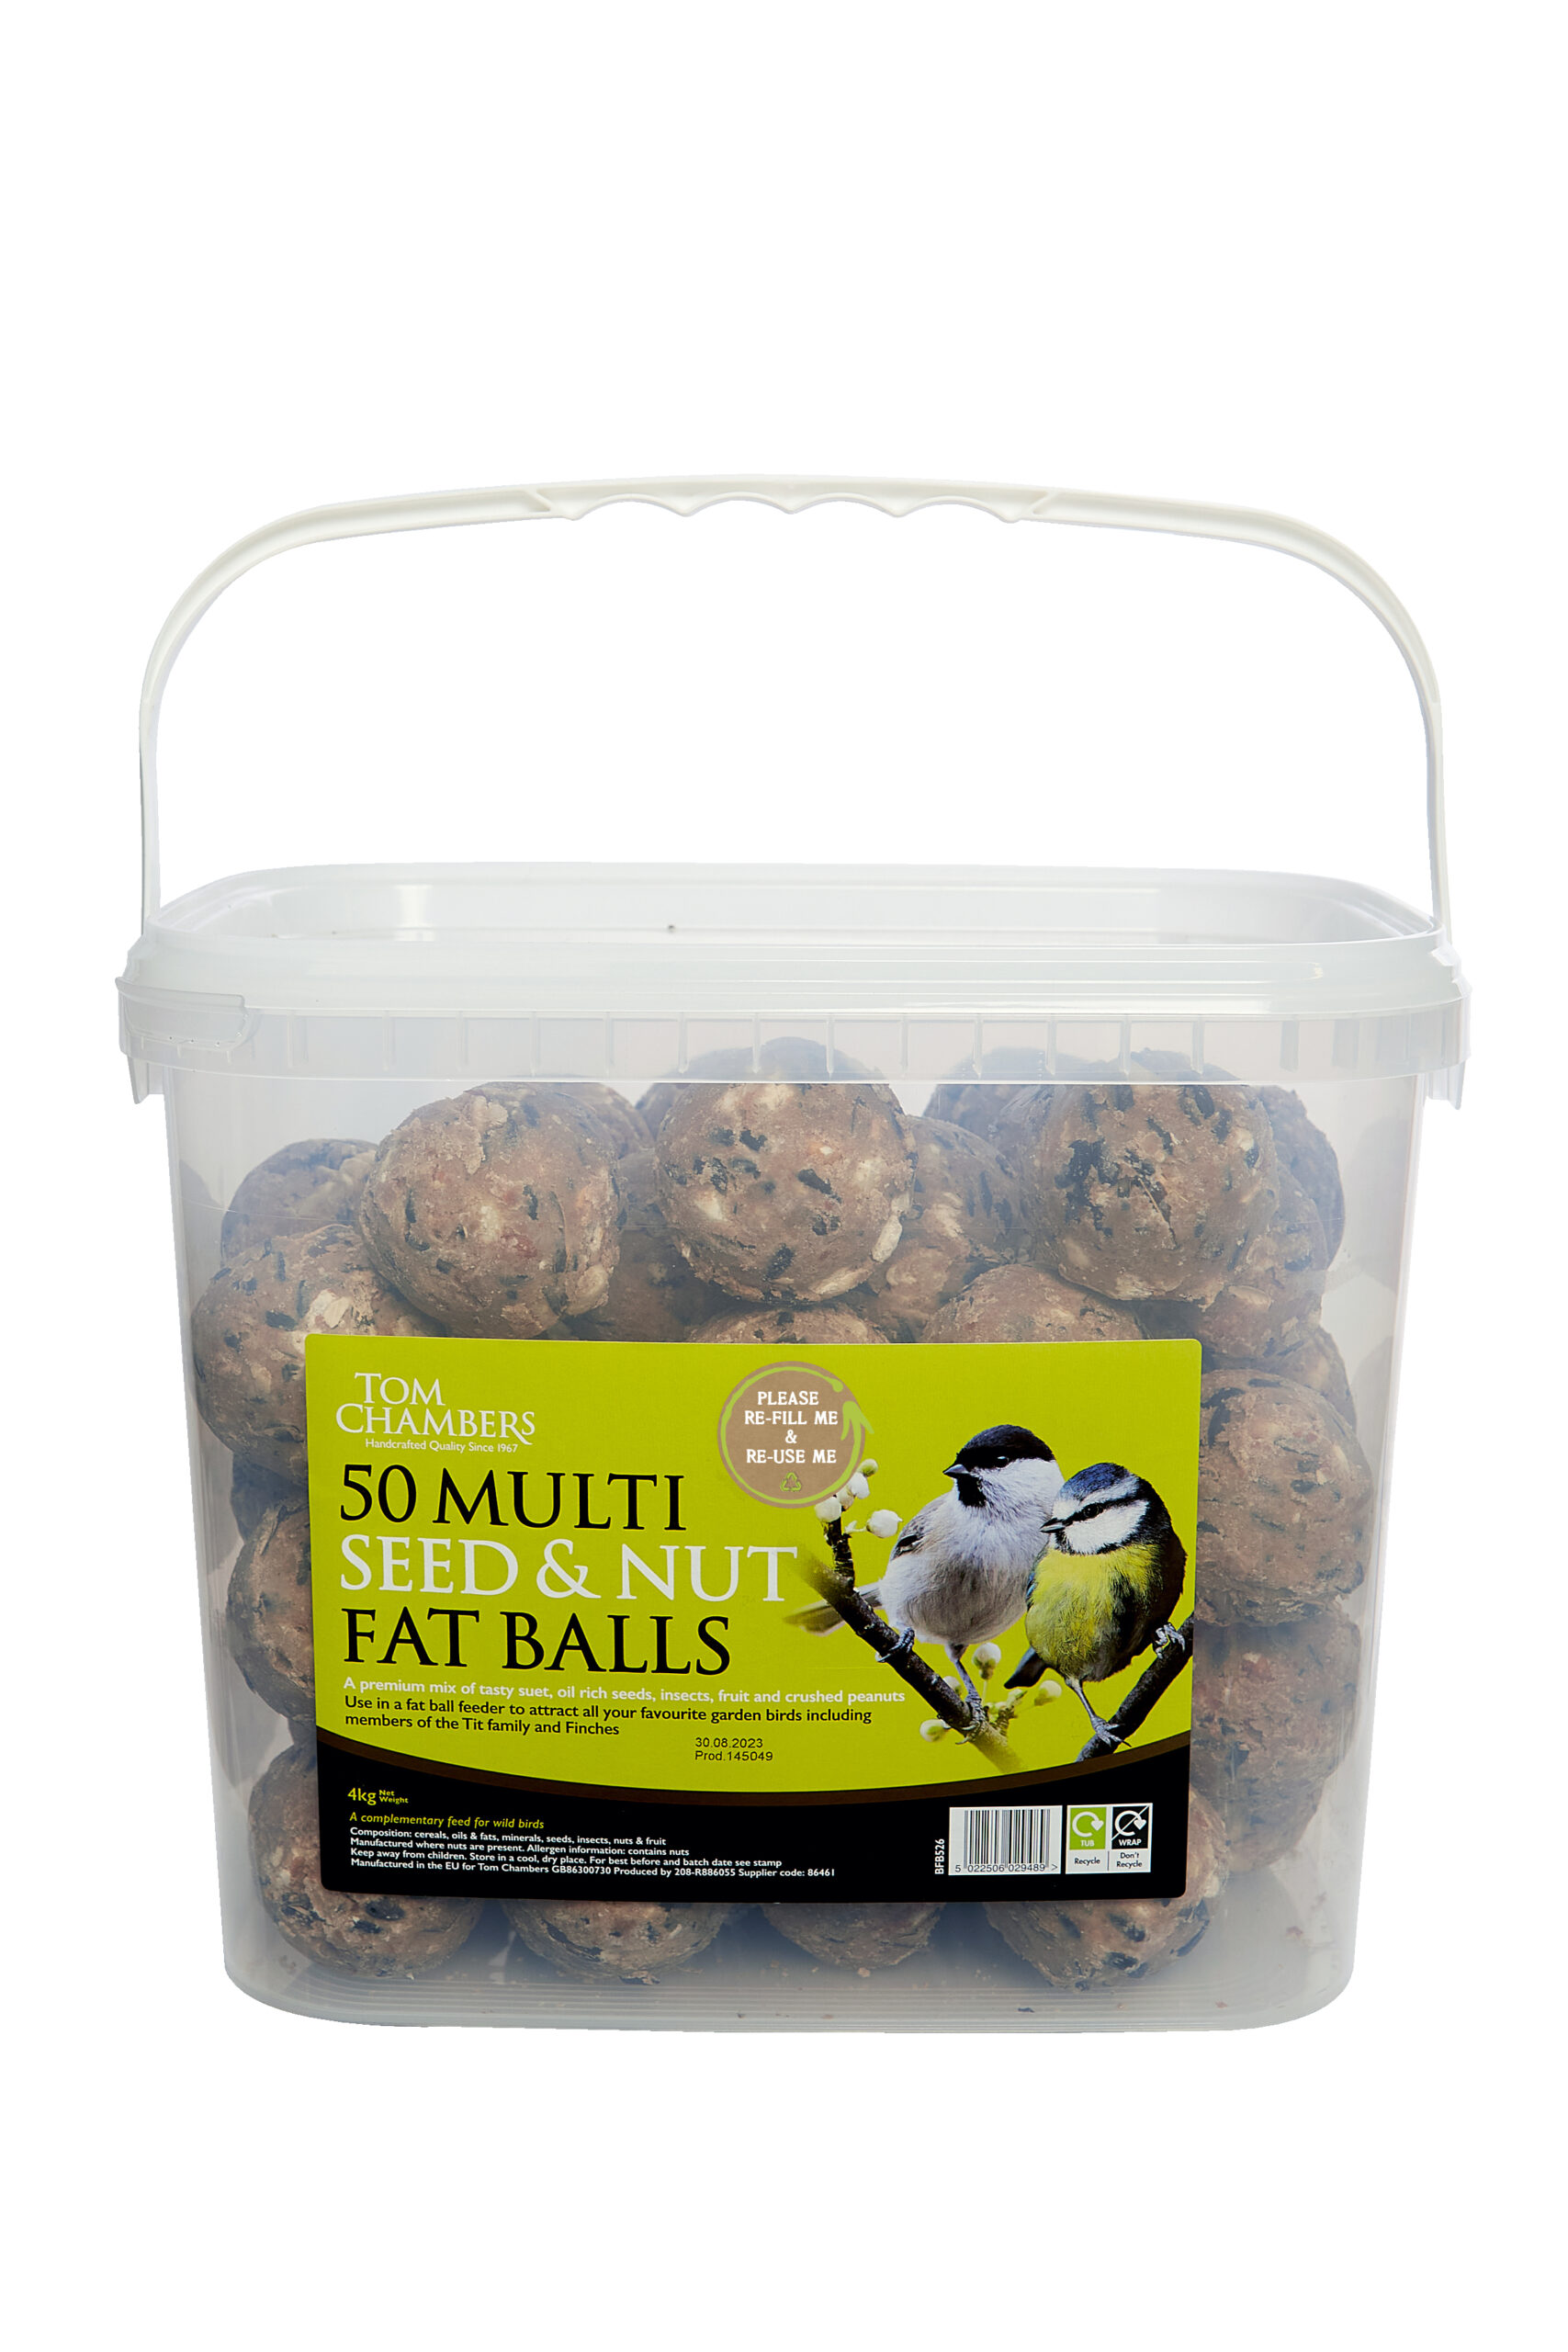 Tom chambers Fat Balls - 50 Tub - Multi Seed & Nut Fat Ball